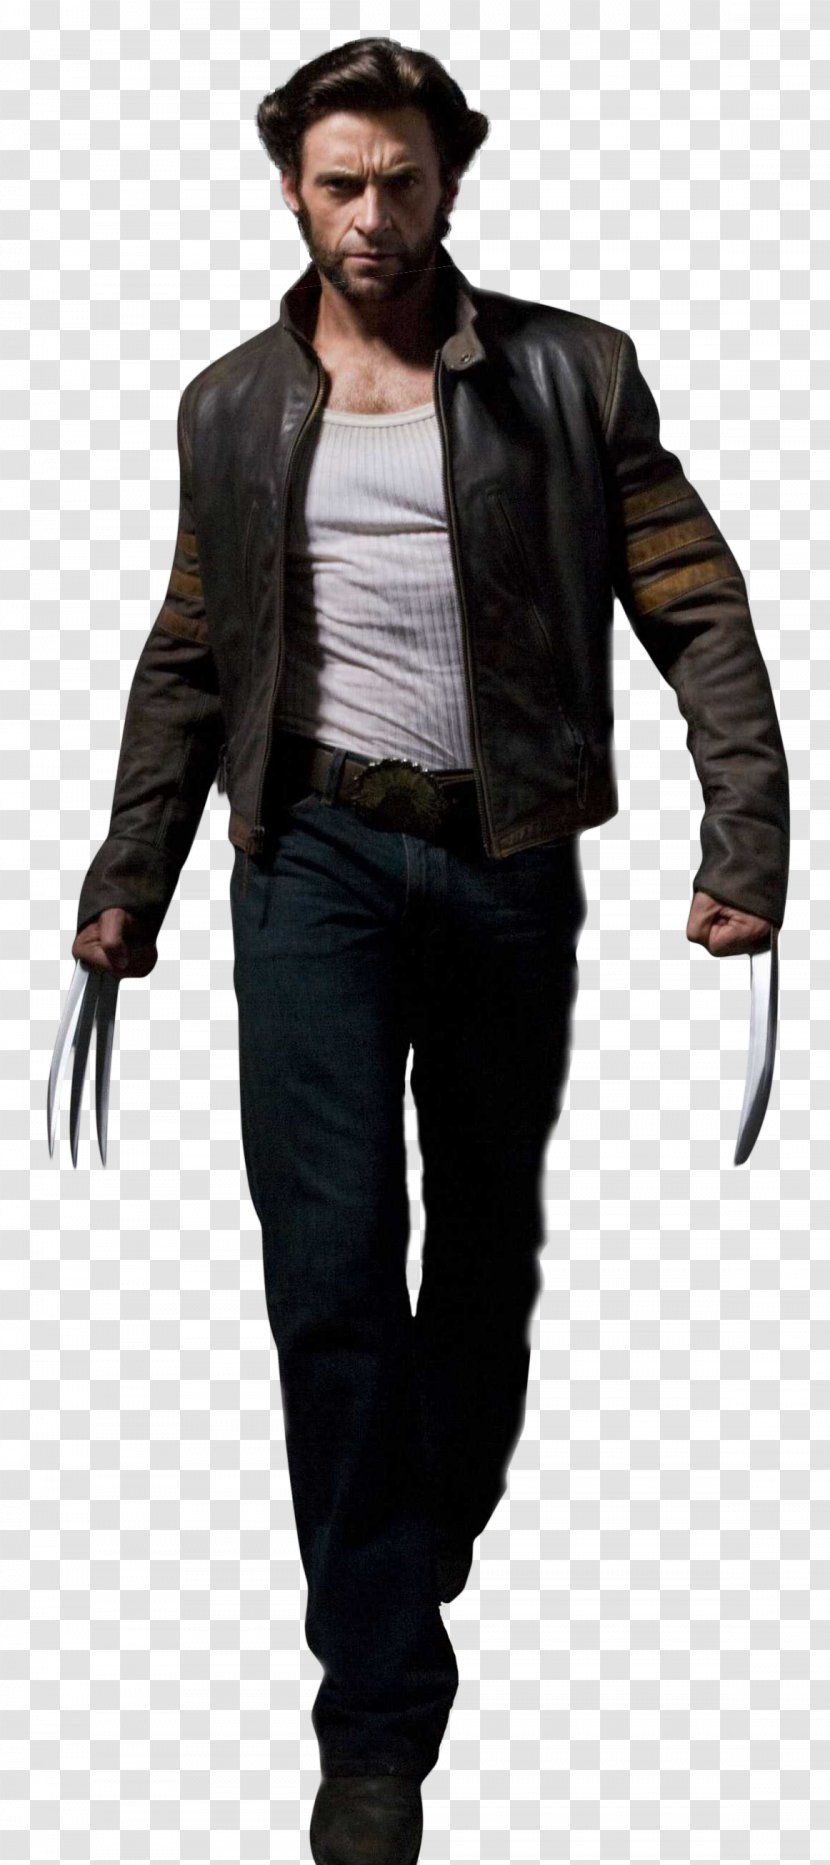 Hugh Jackman The Wolverine Professor X Magneto - Leather Jacket Transparent PNG